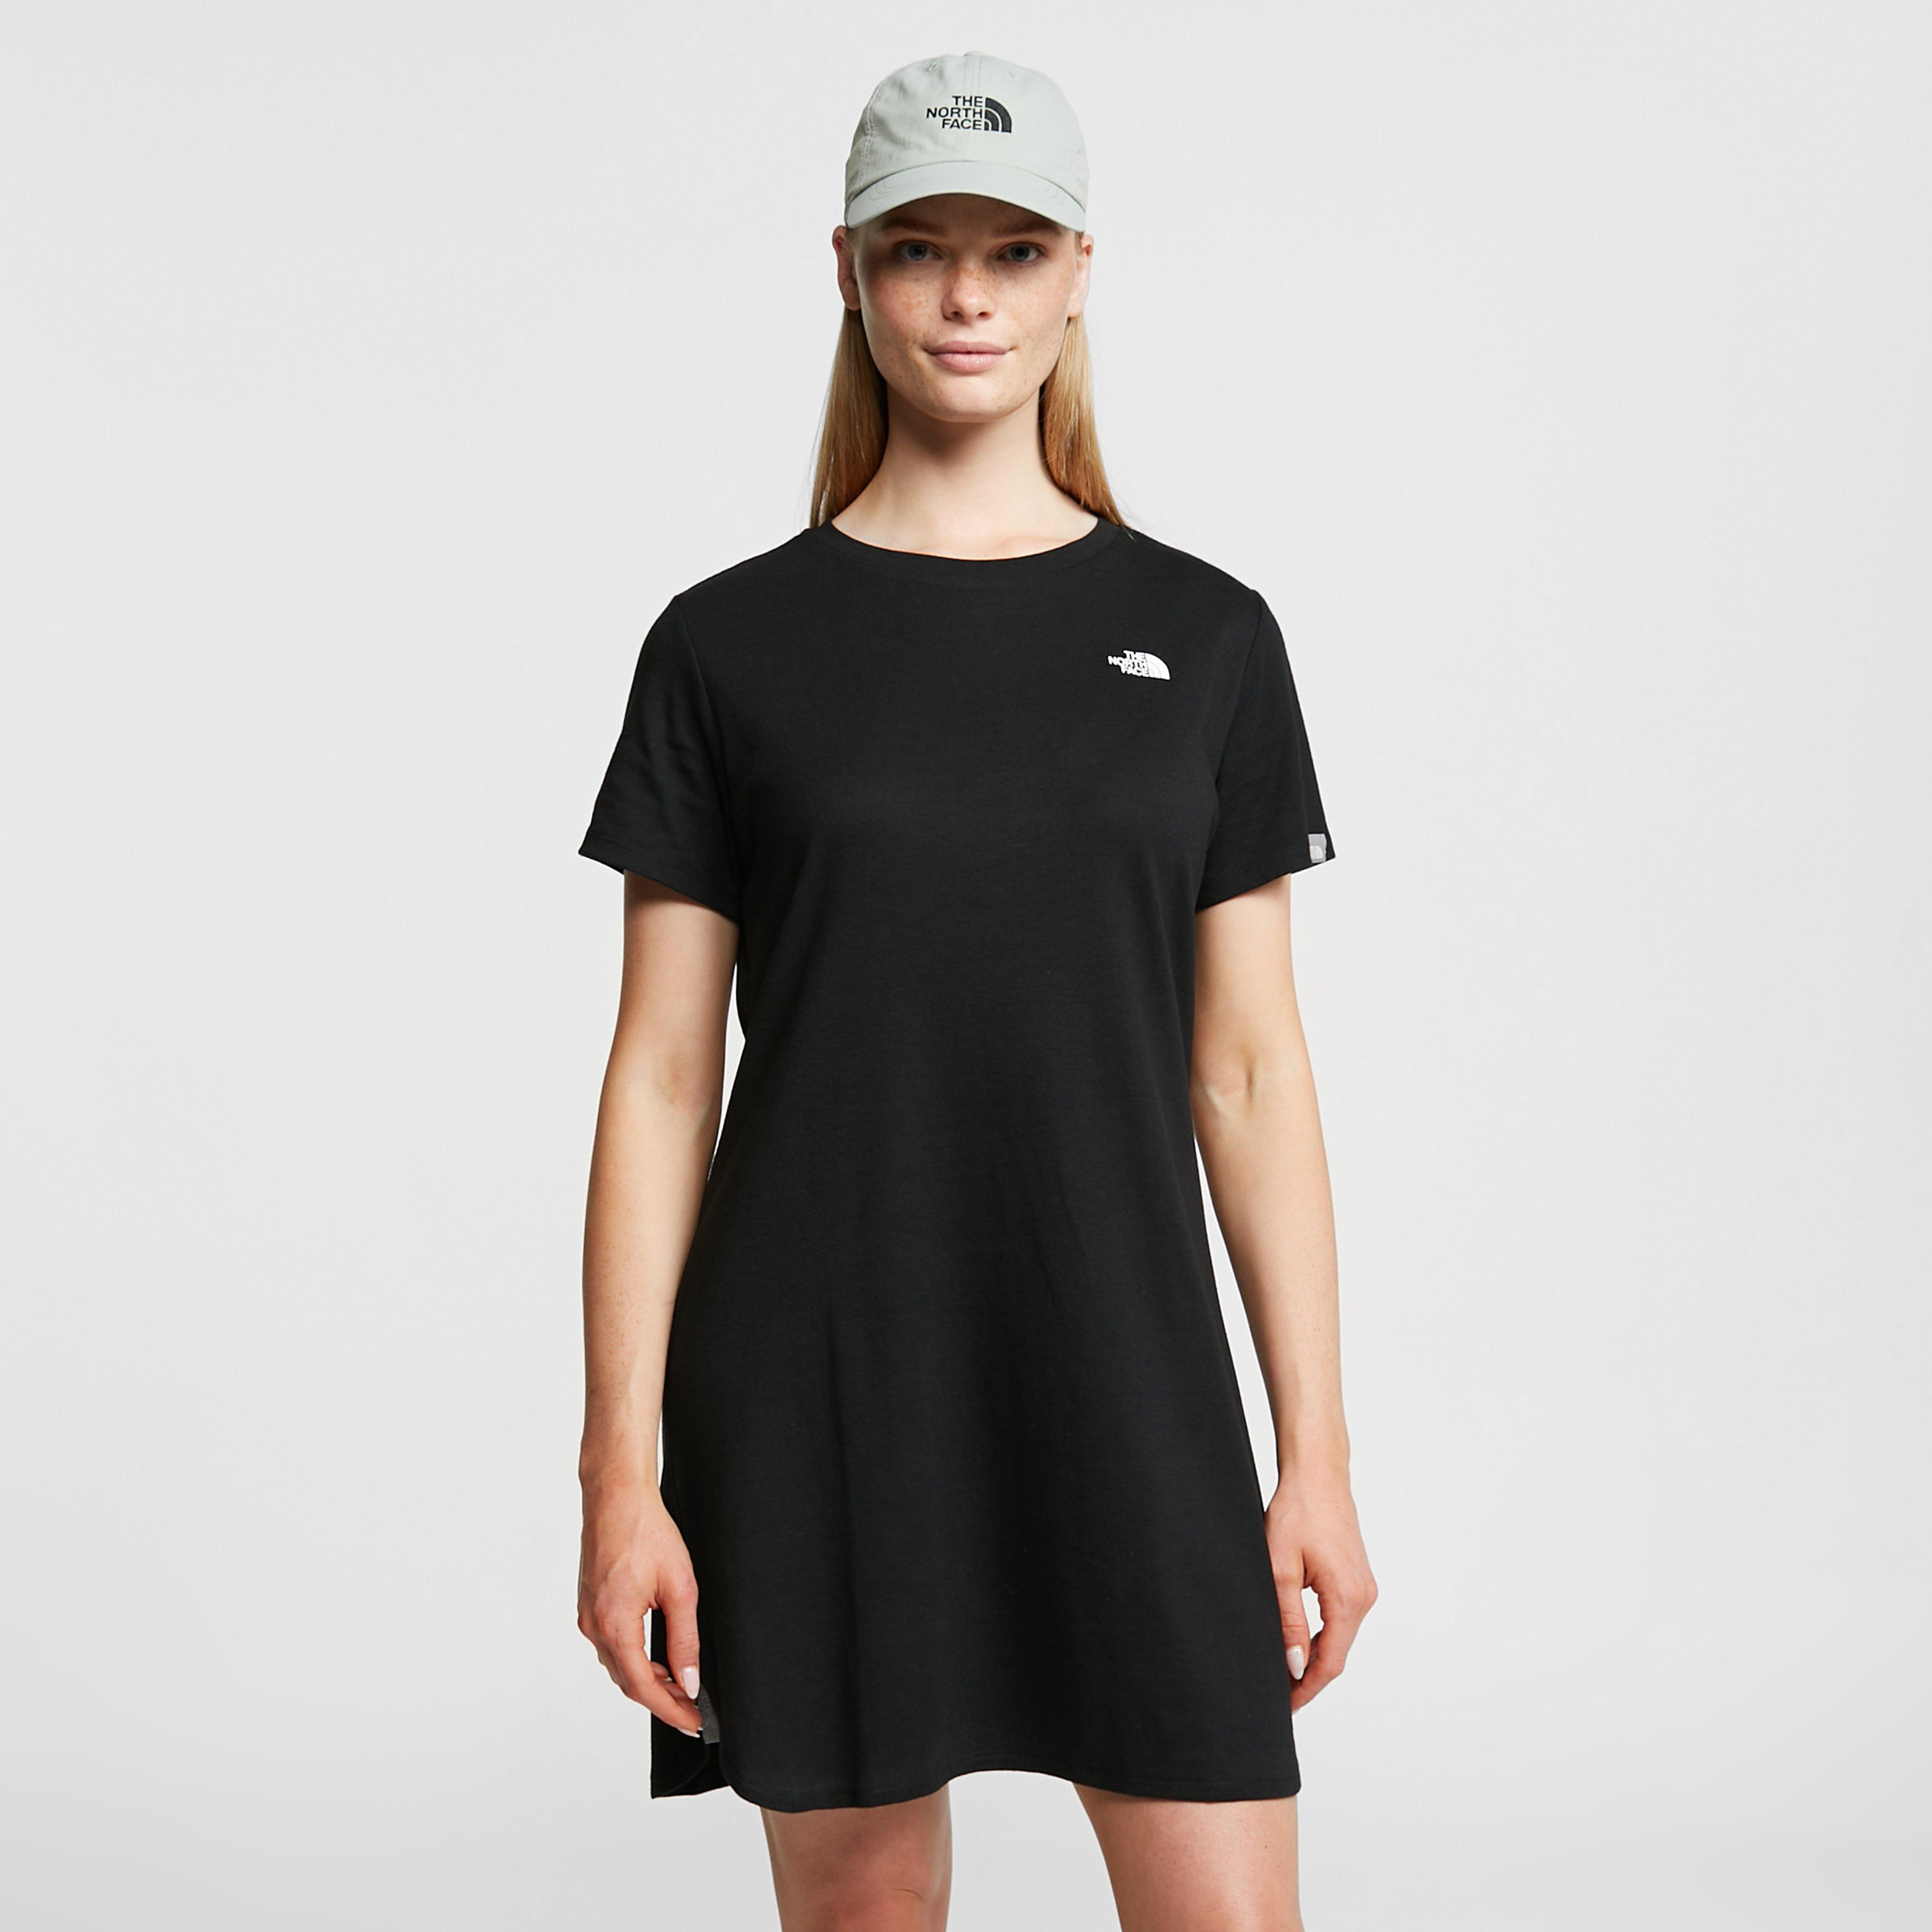 The North Face Simple Dome T-shirt Dress Womens - Black/black  Black/black